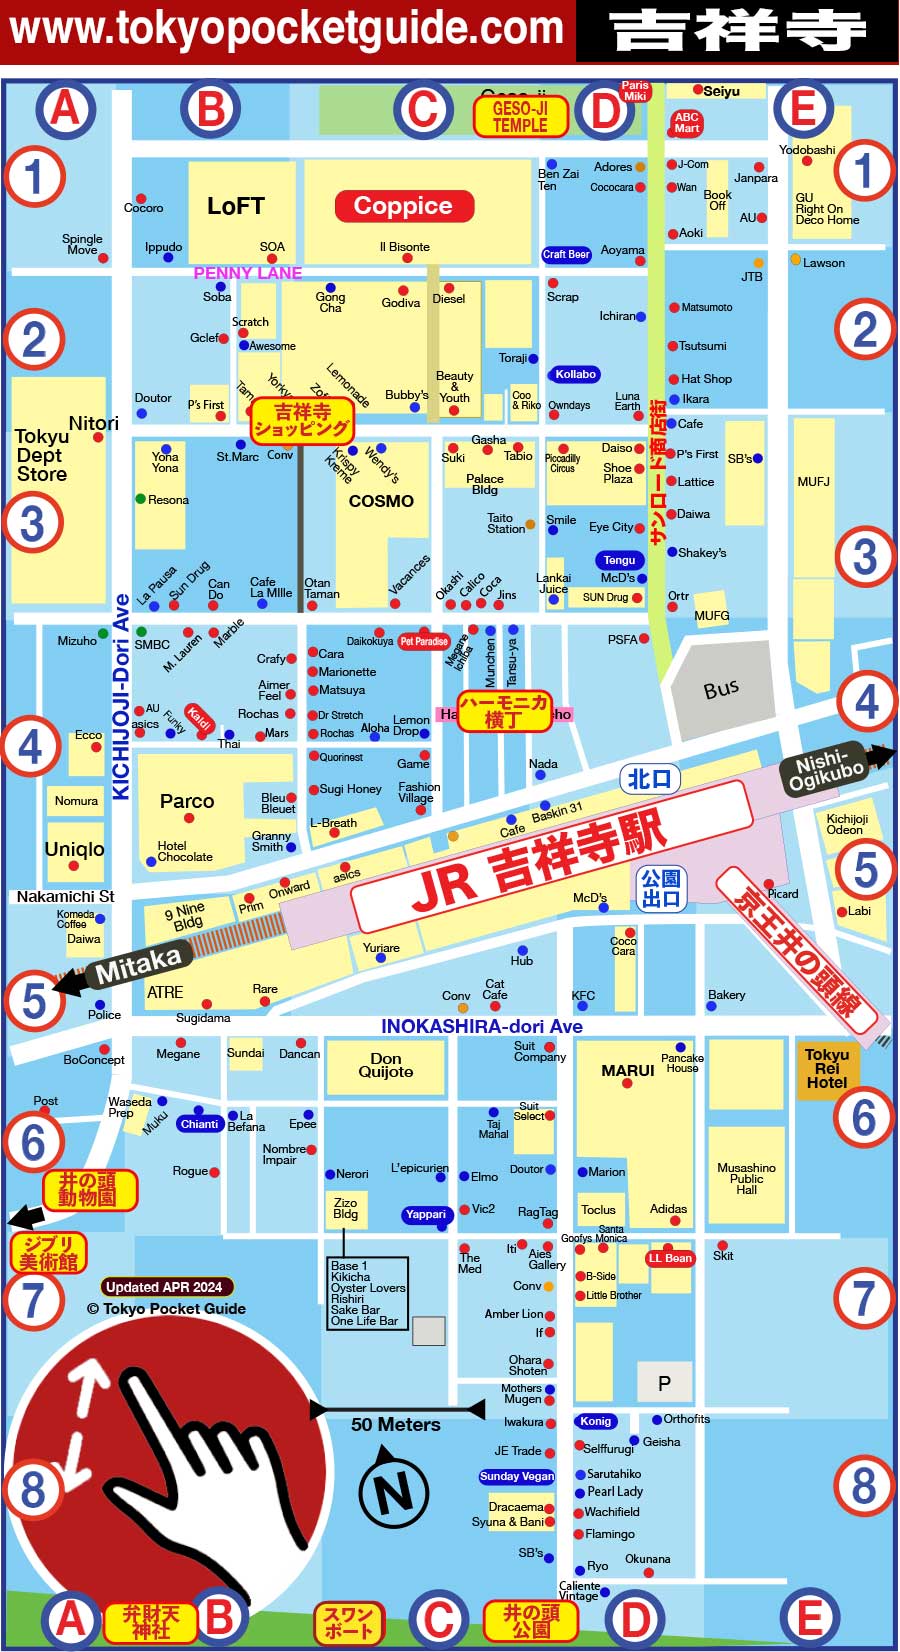 Tokyo Pocket Guide 吉祥寺 わかりやすい ショッピング マップ